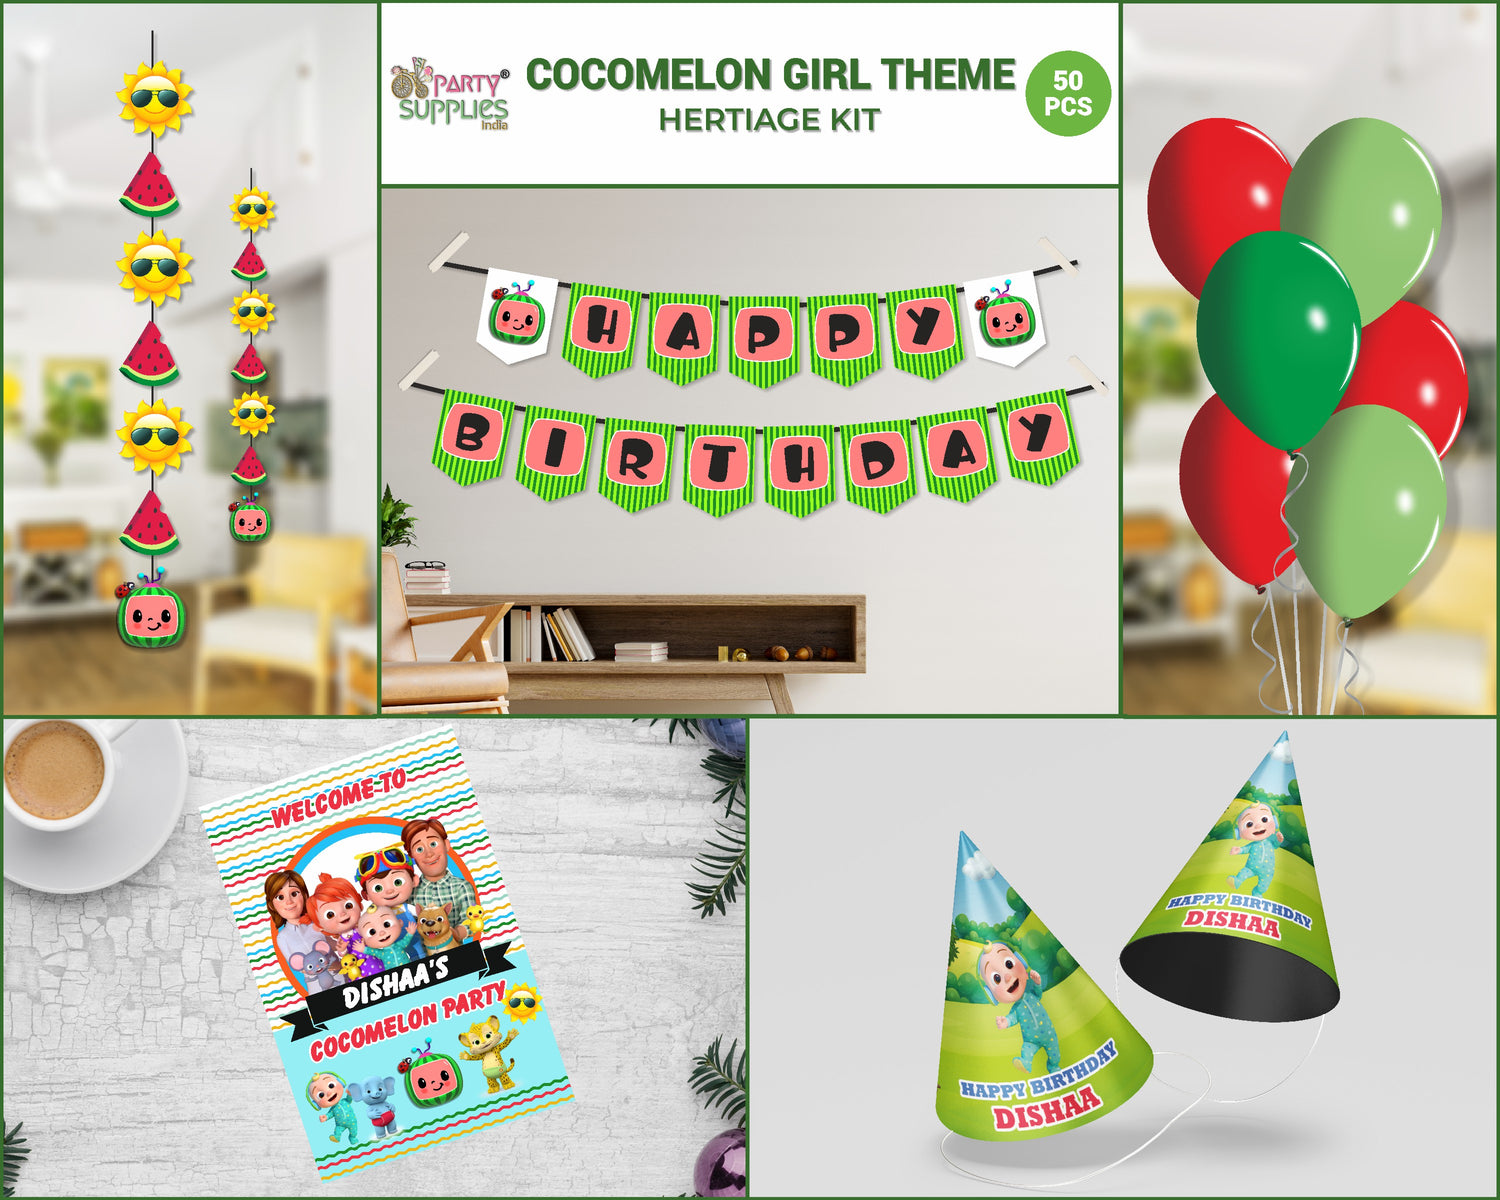 PSI Coco Melon Girl Theme Heritage Kit